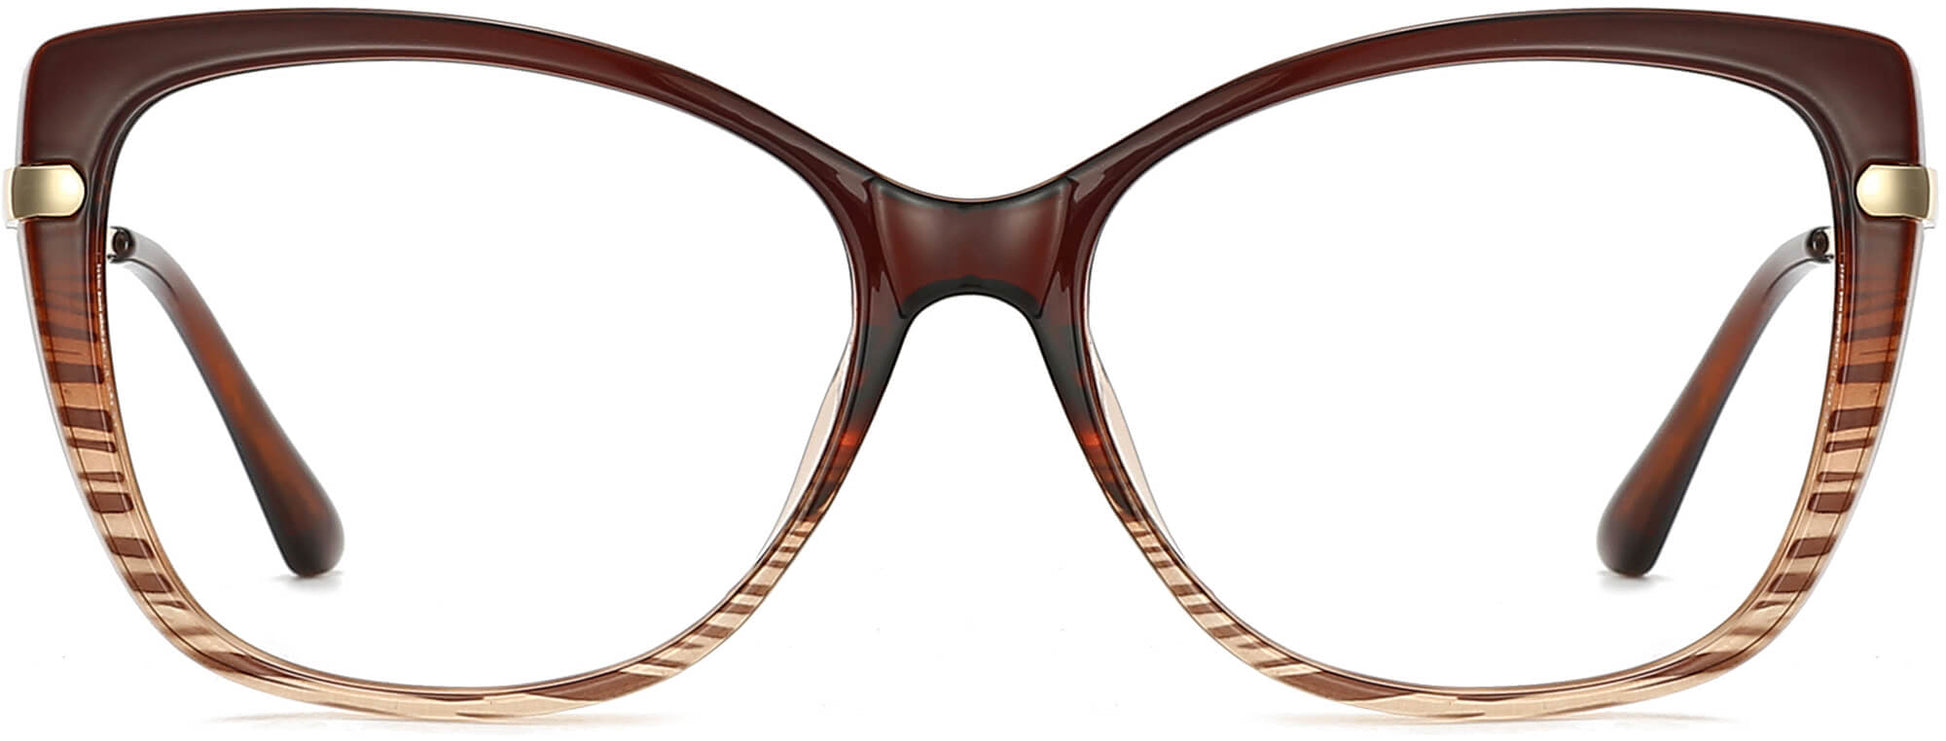 Kora Cateye Brown Eyeglasses from ANRRI, front view